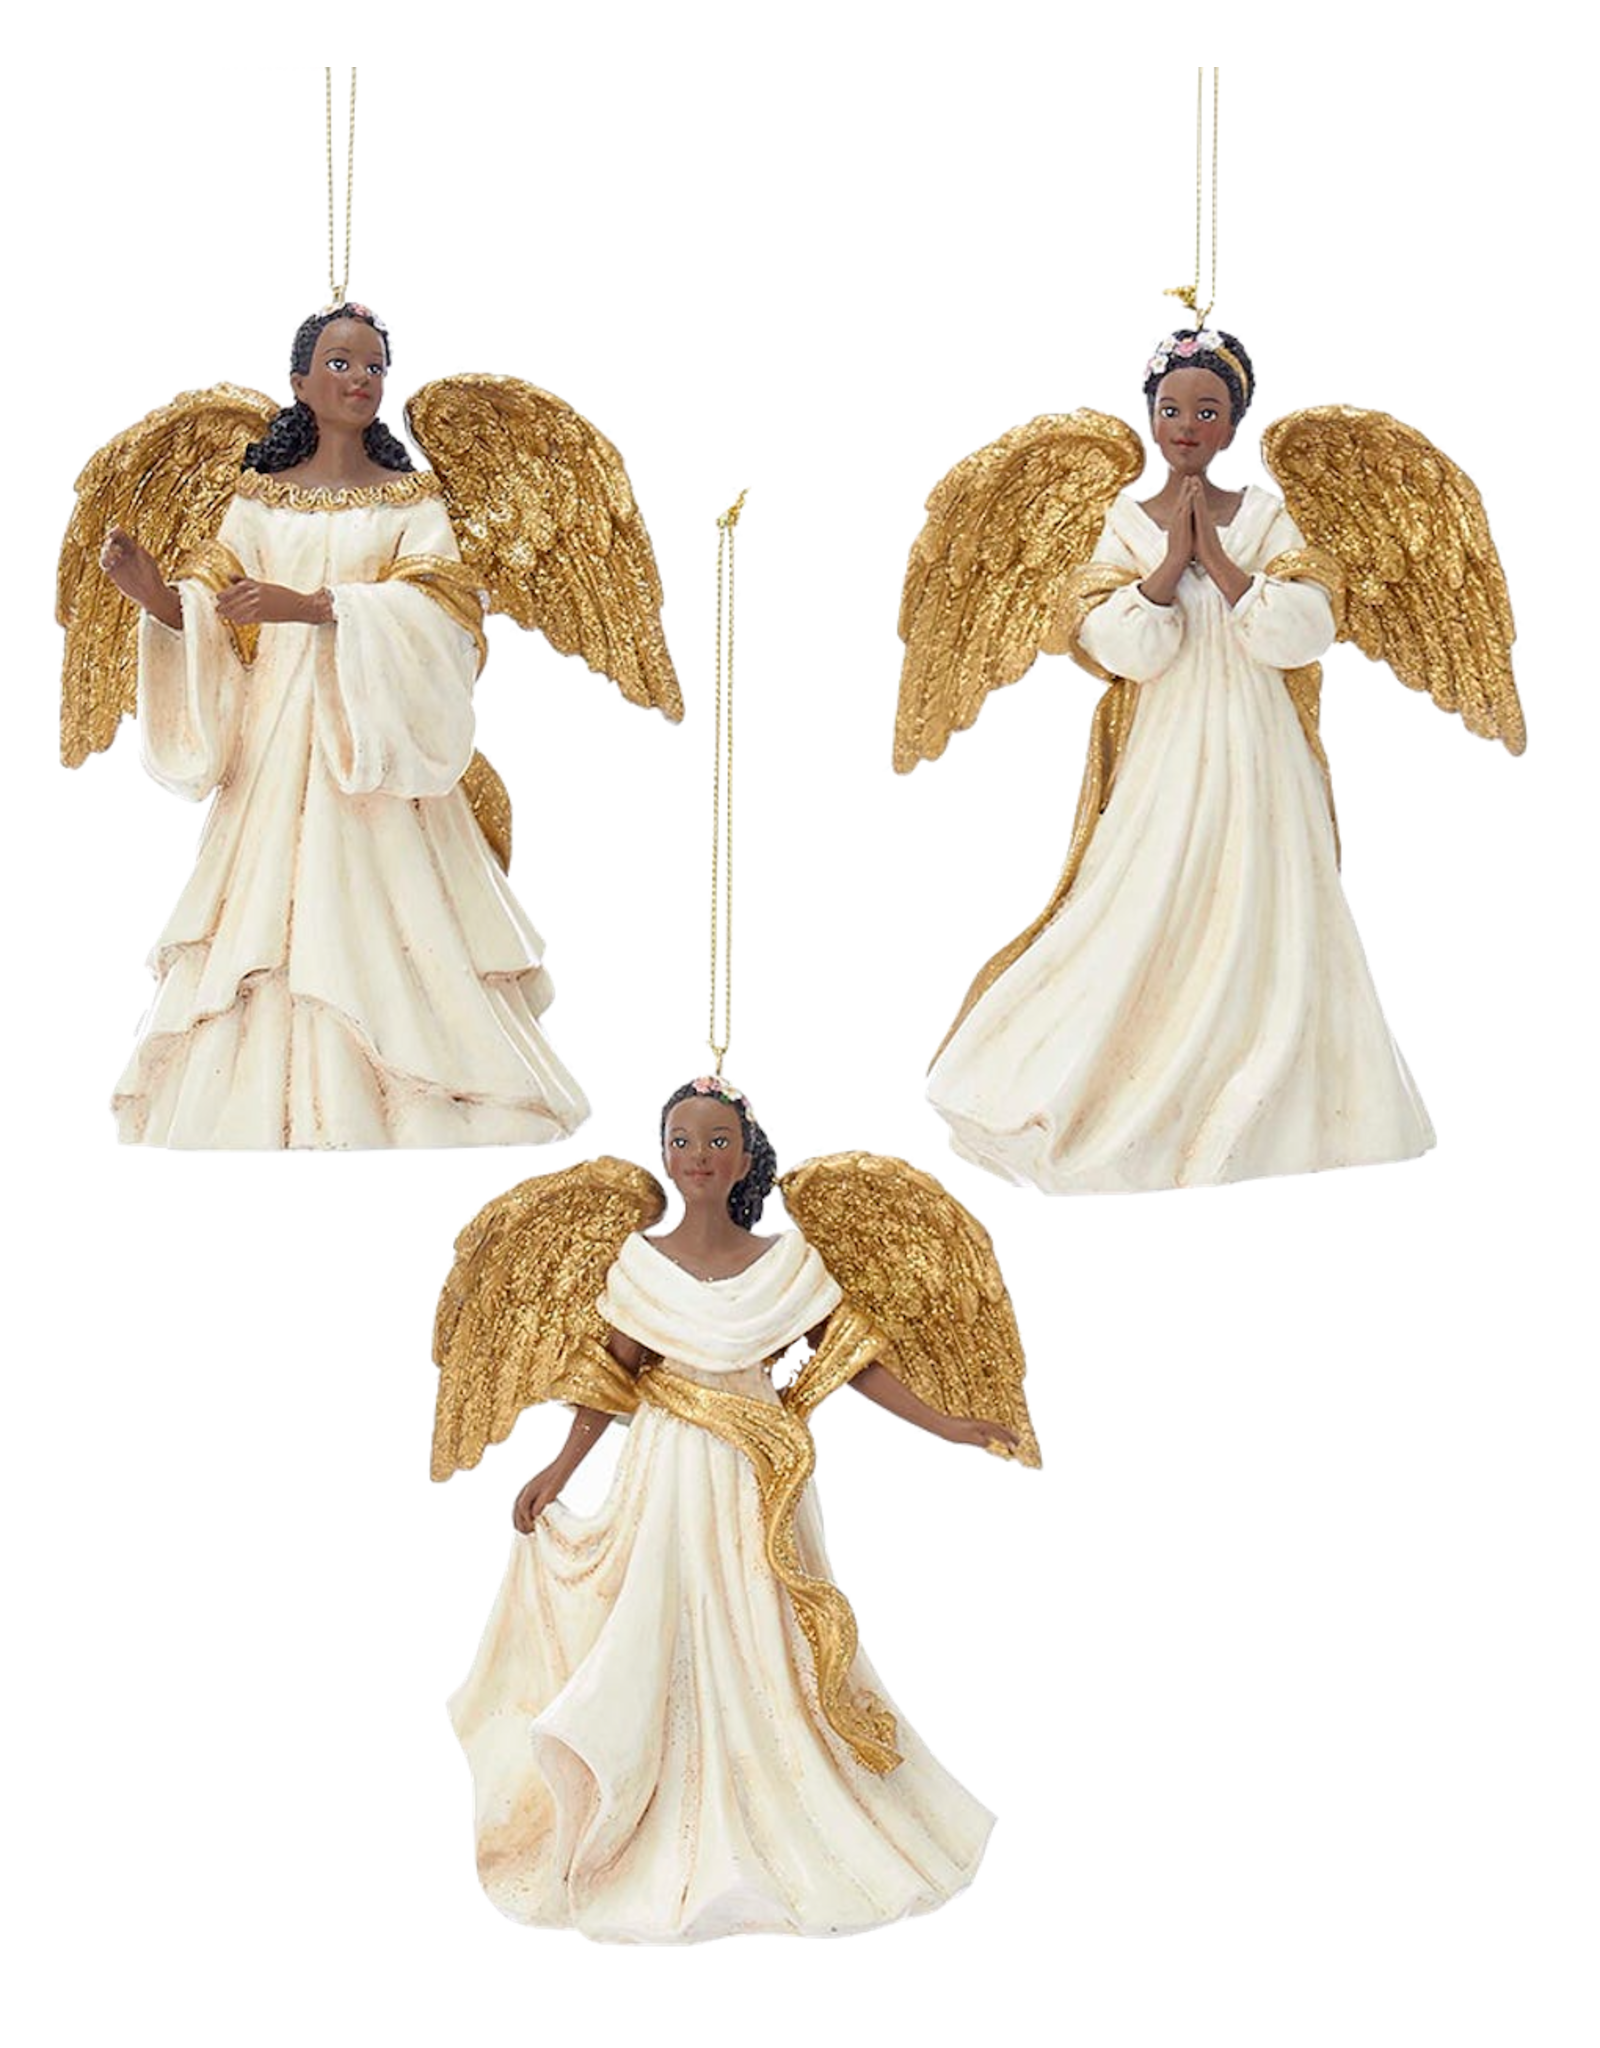 Kurt Adler Ivory n Gold Black African American Angel Ornaments 3pc Set